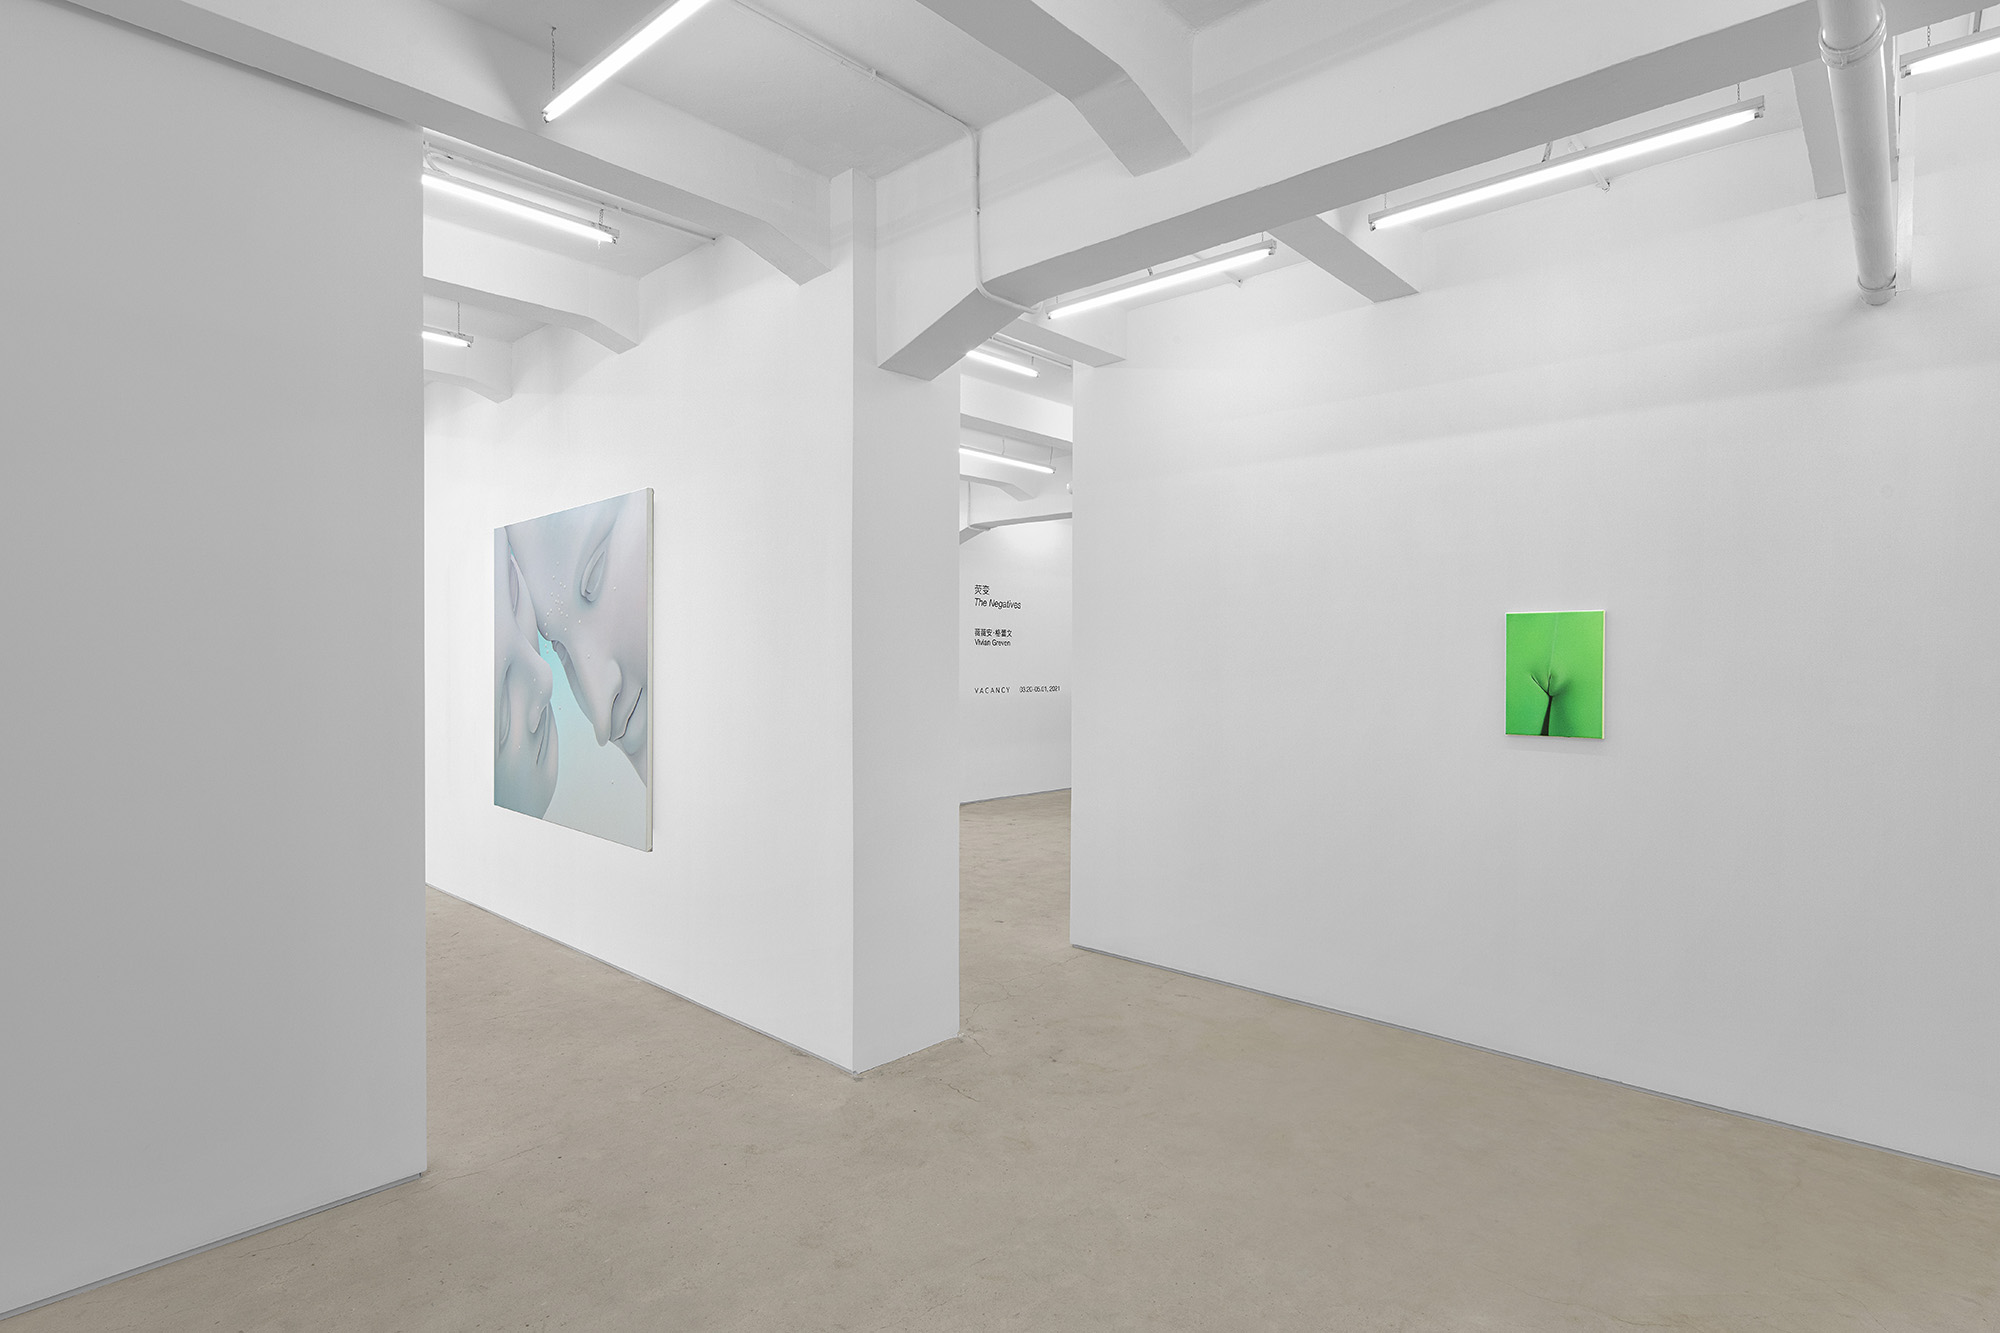 Vivian Greven, The Negatives, solo exhibition at Gallery Vacancy, installation view 26